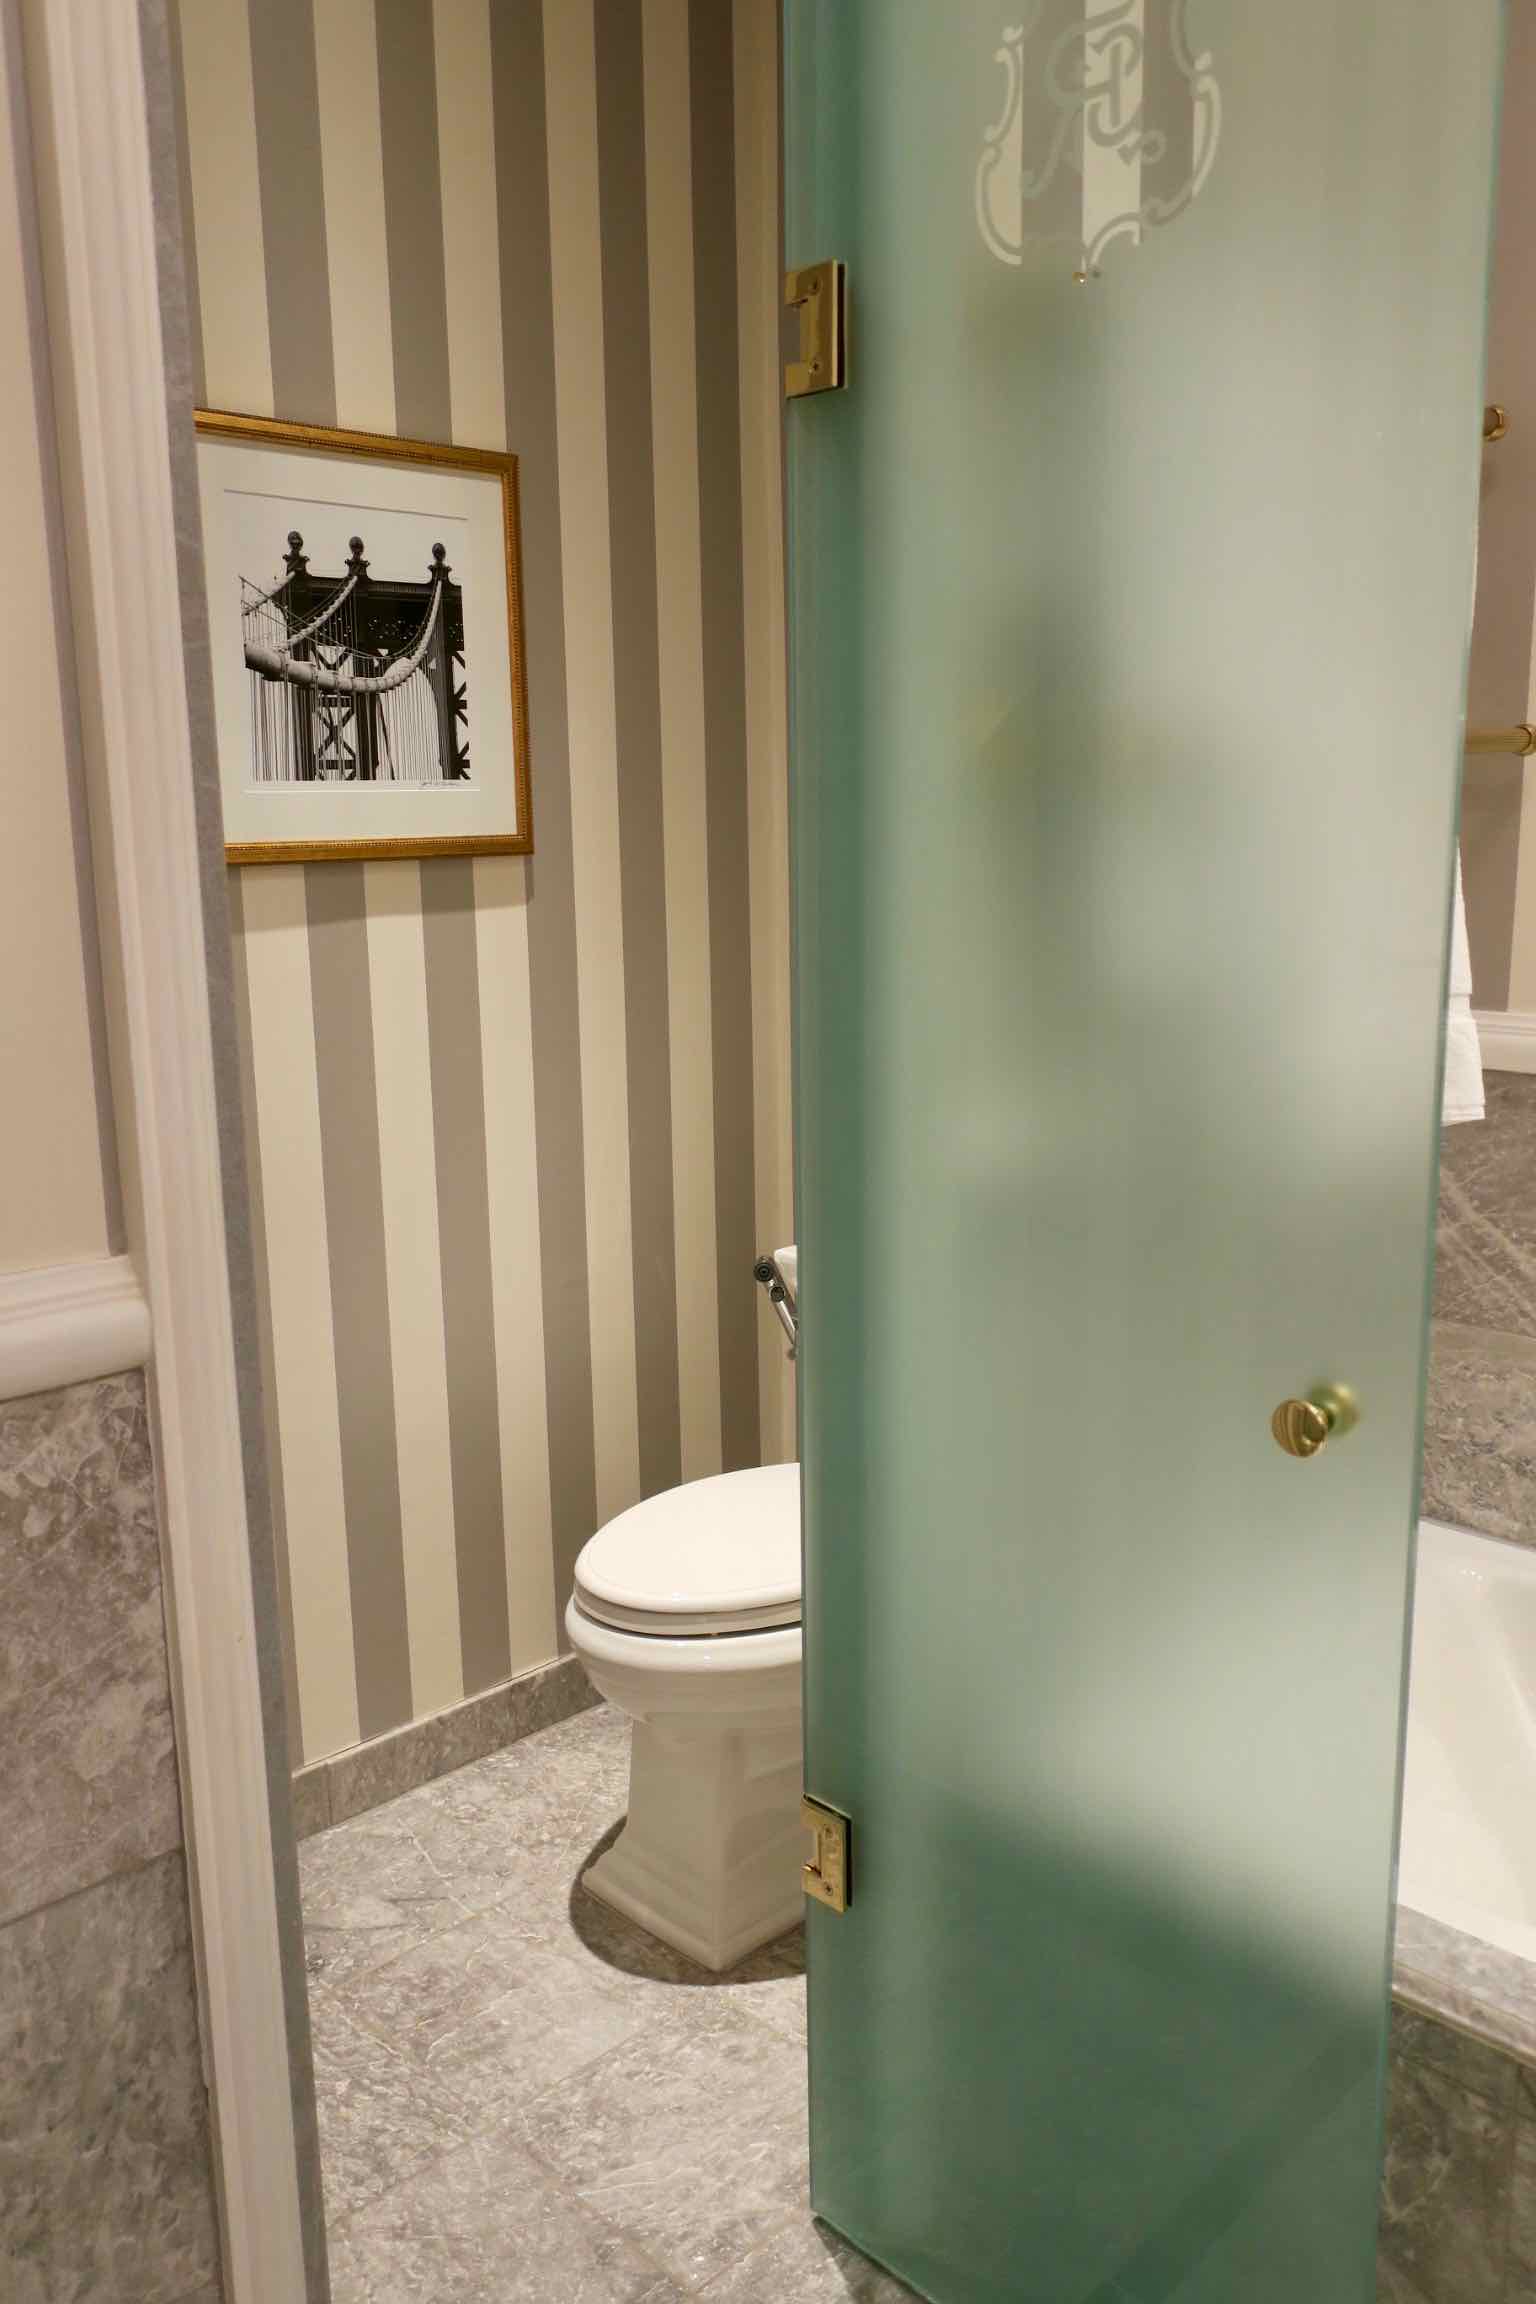 The St. Regis New York Superior Room toilet